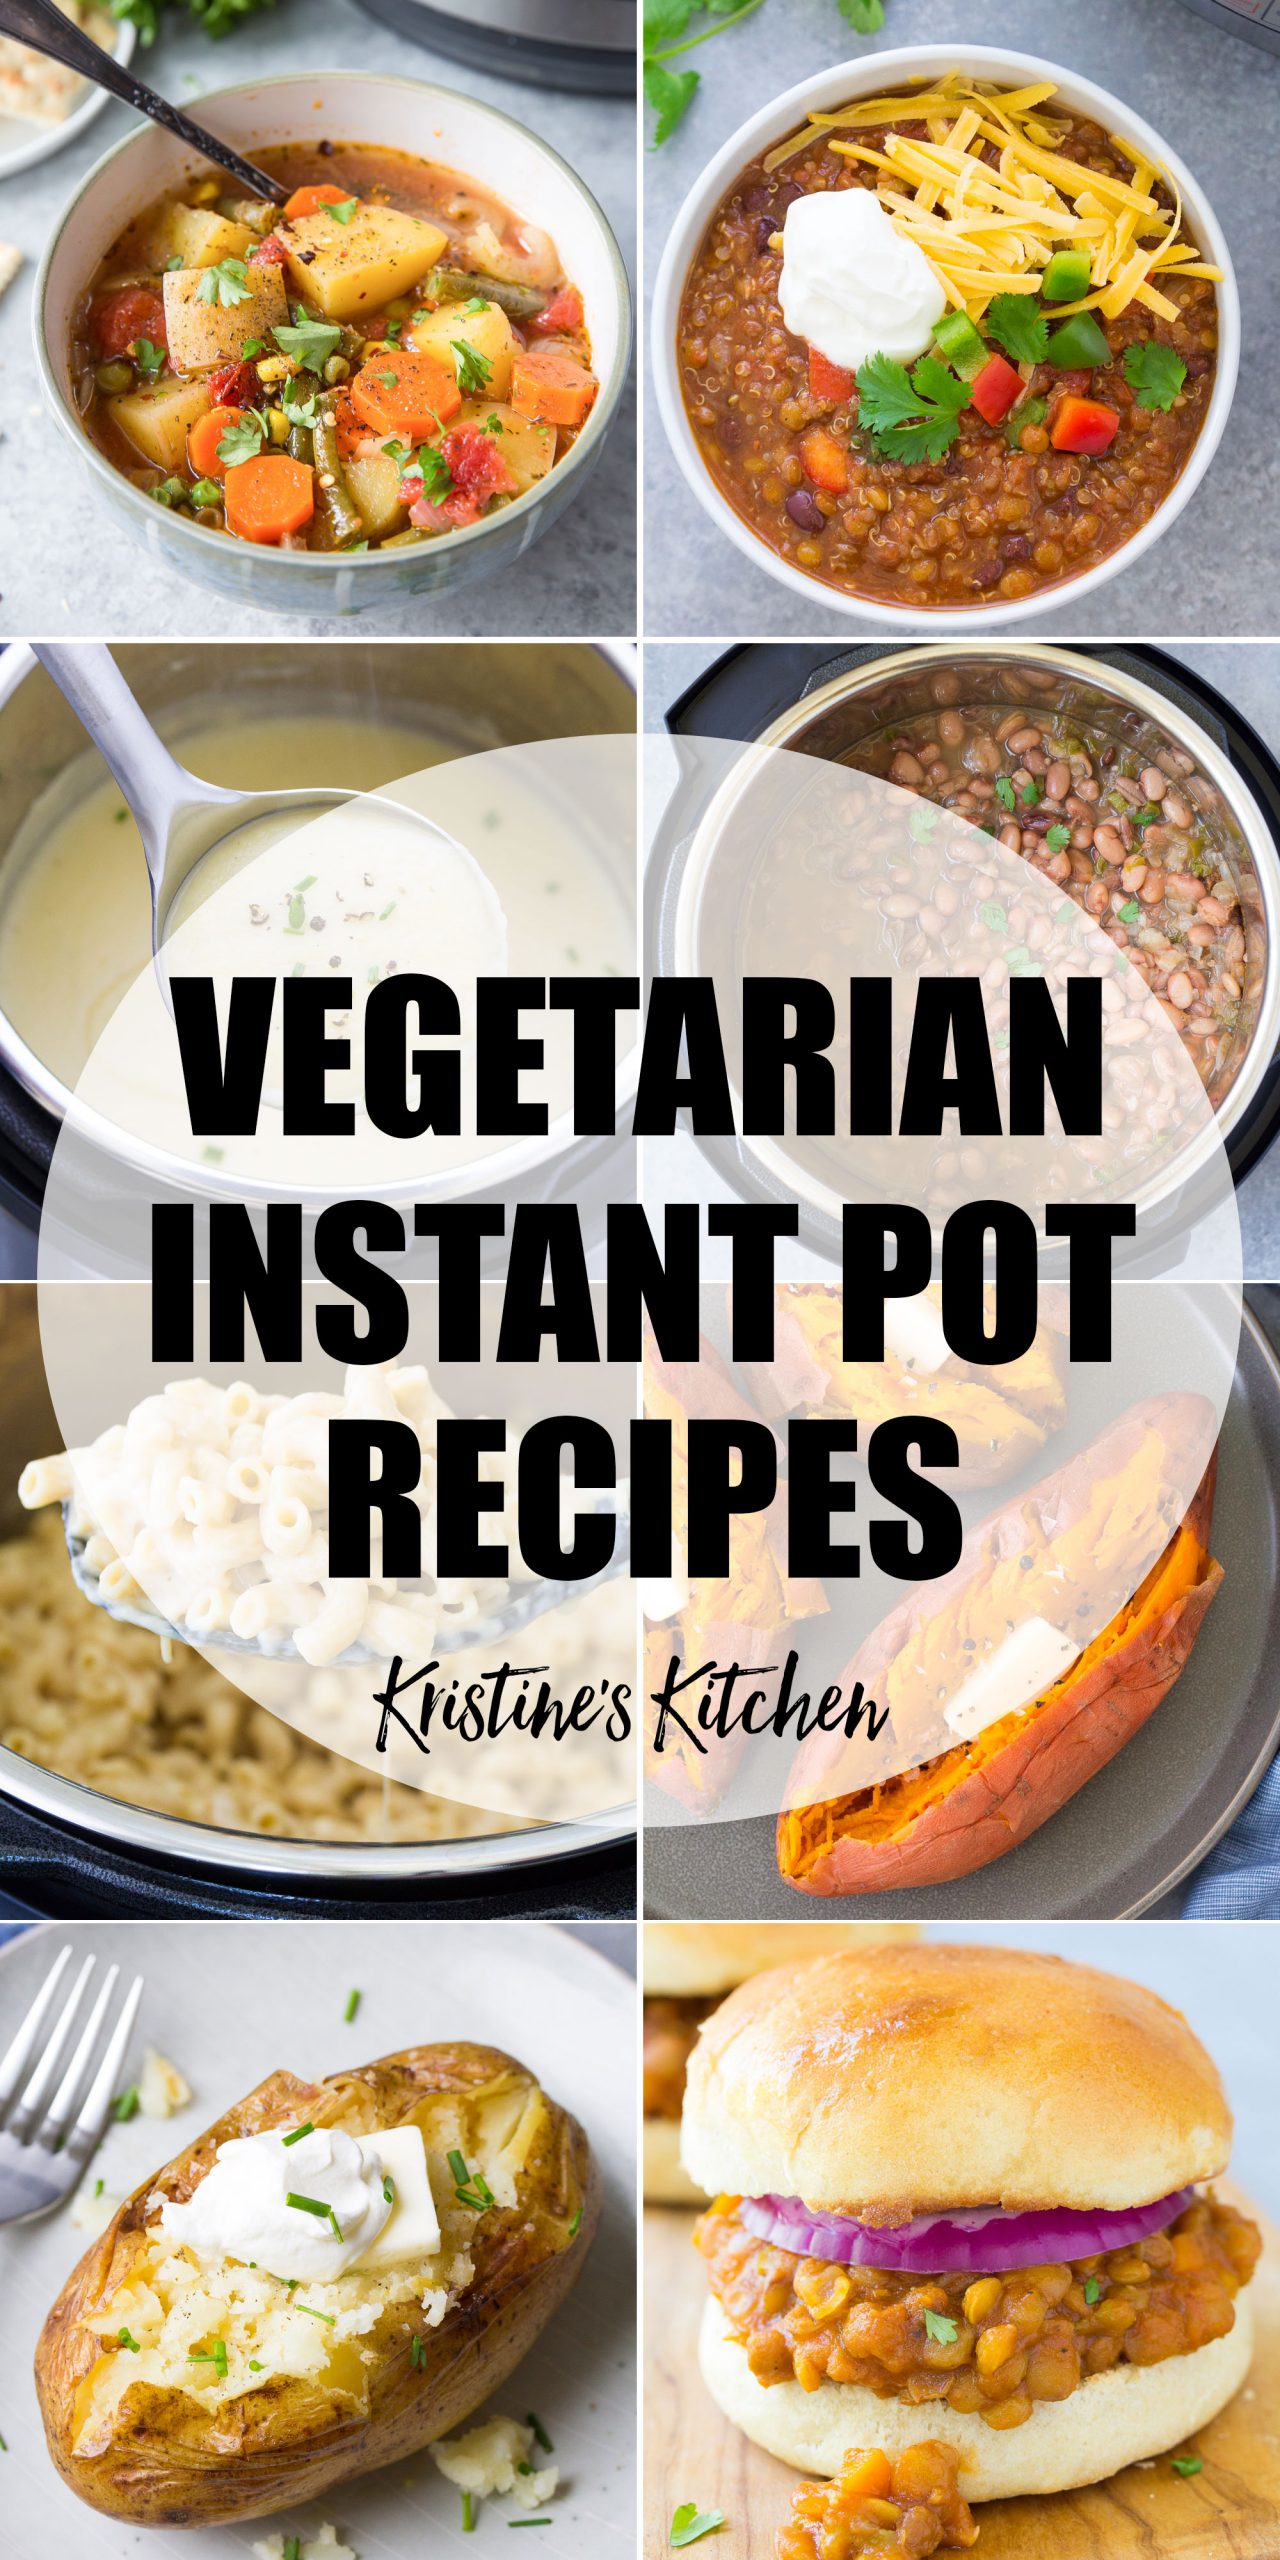 https://kristineskitchenblog.com/wp-content/uploads/2021/01/vegetarian-instant-pot-recipes-collage-image-2000x4000-1-scaled.jpg